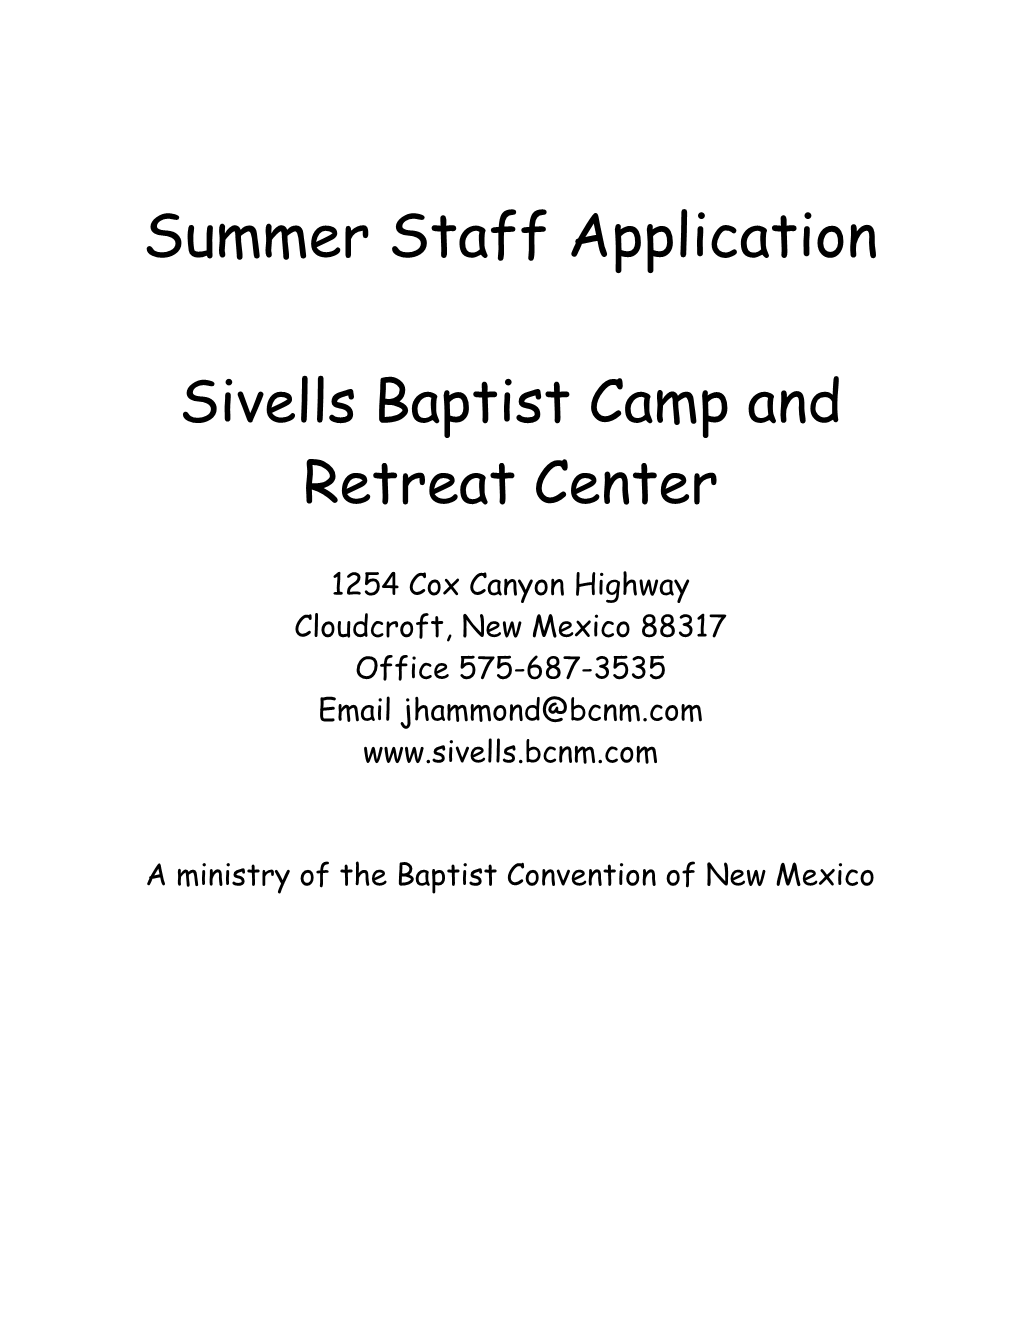 Sivells Baptist Camp and Retreat Center